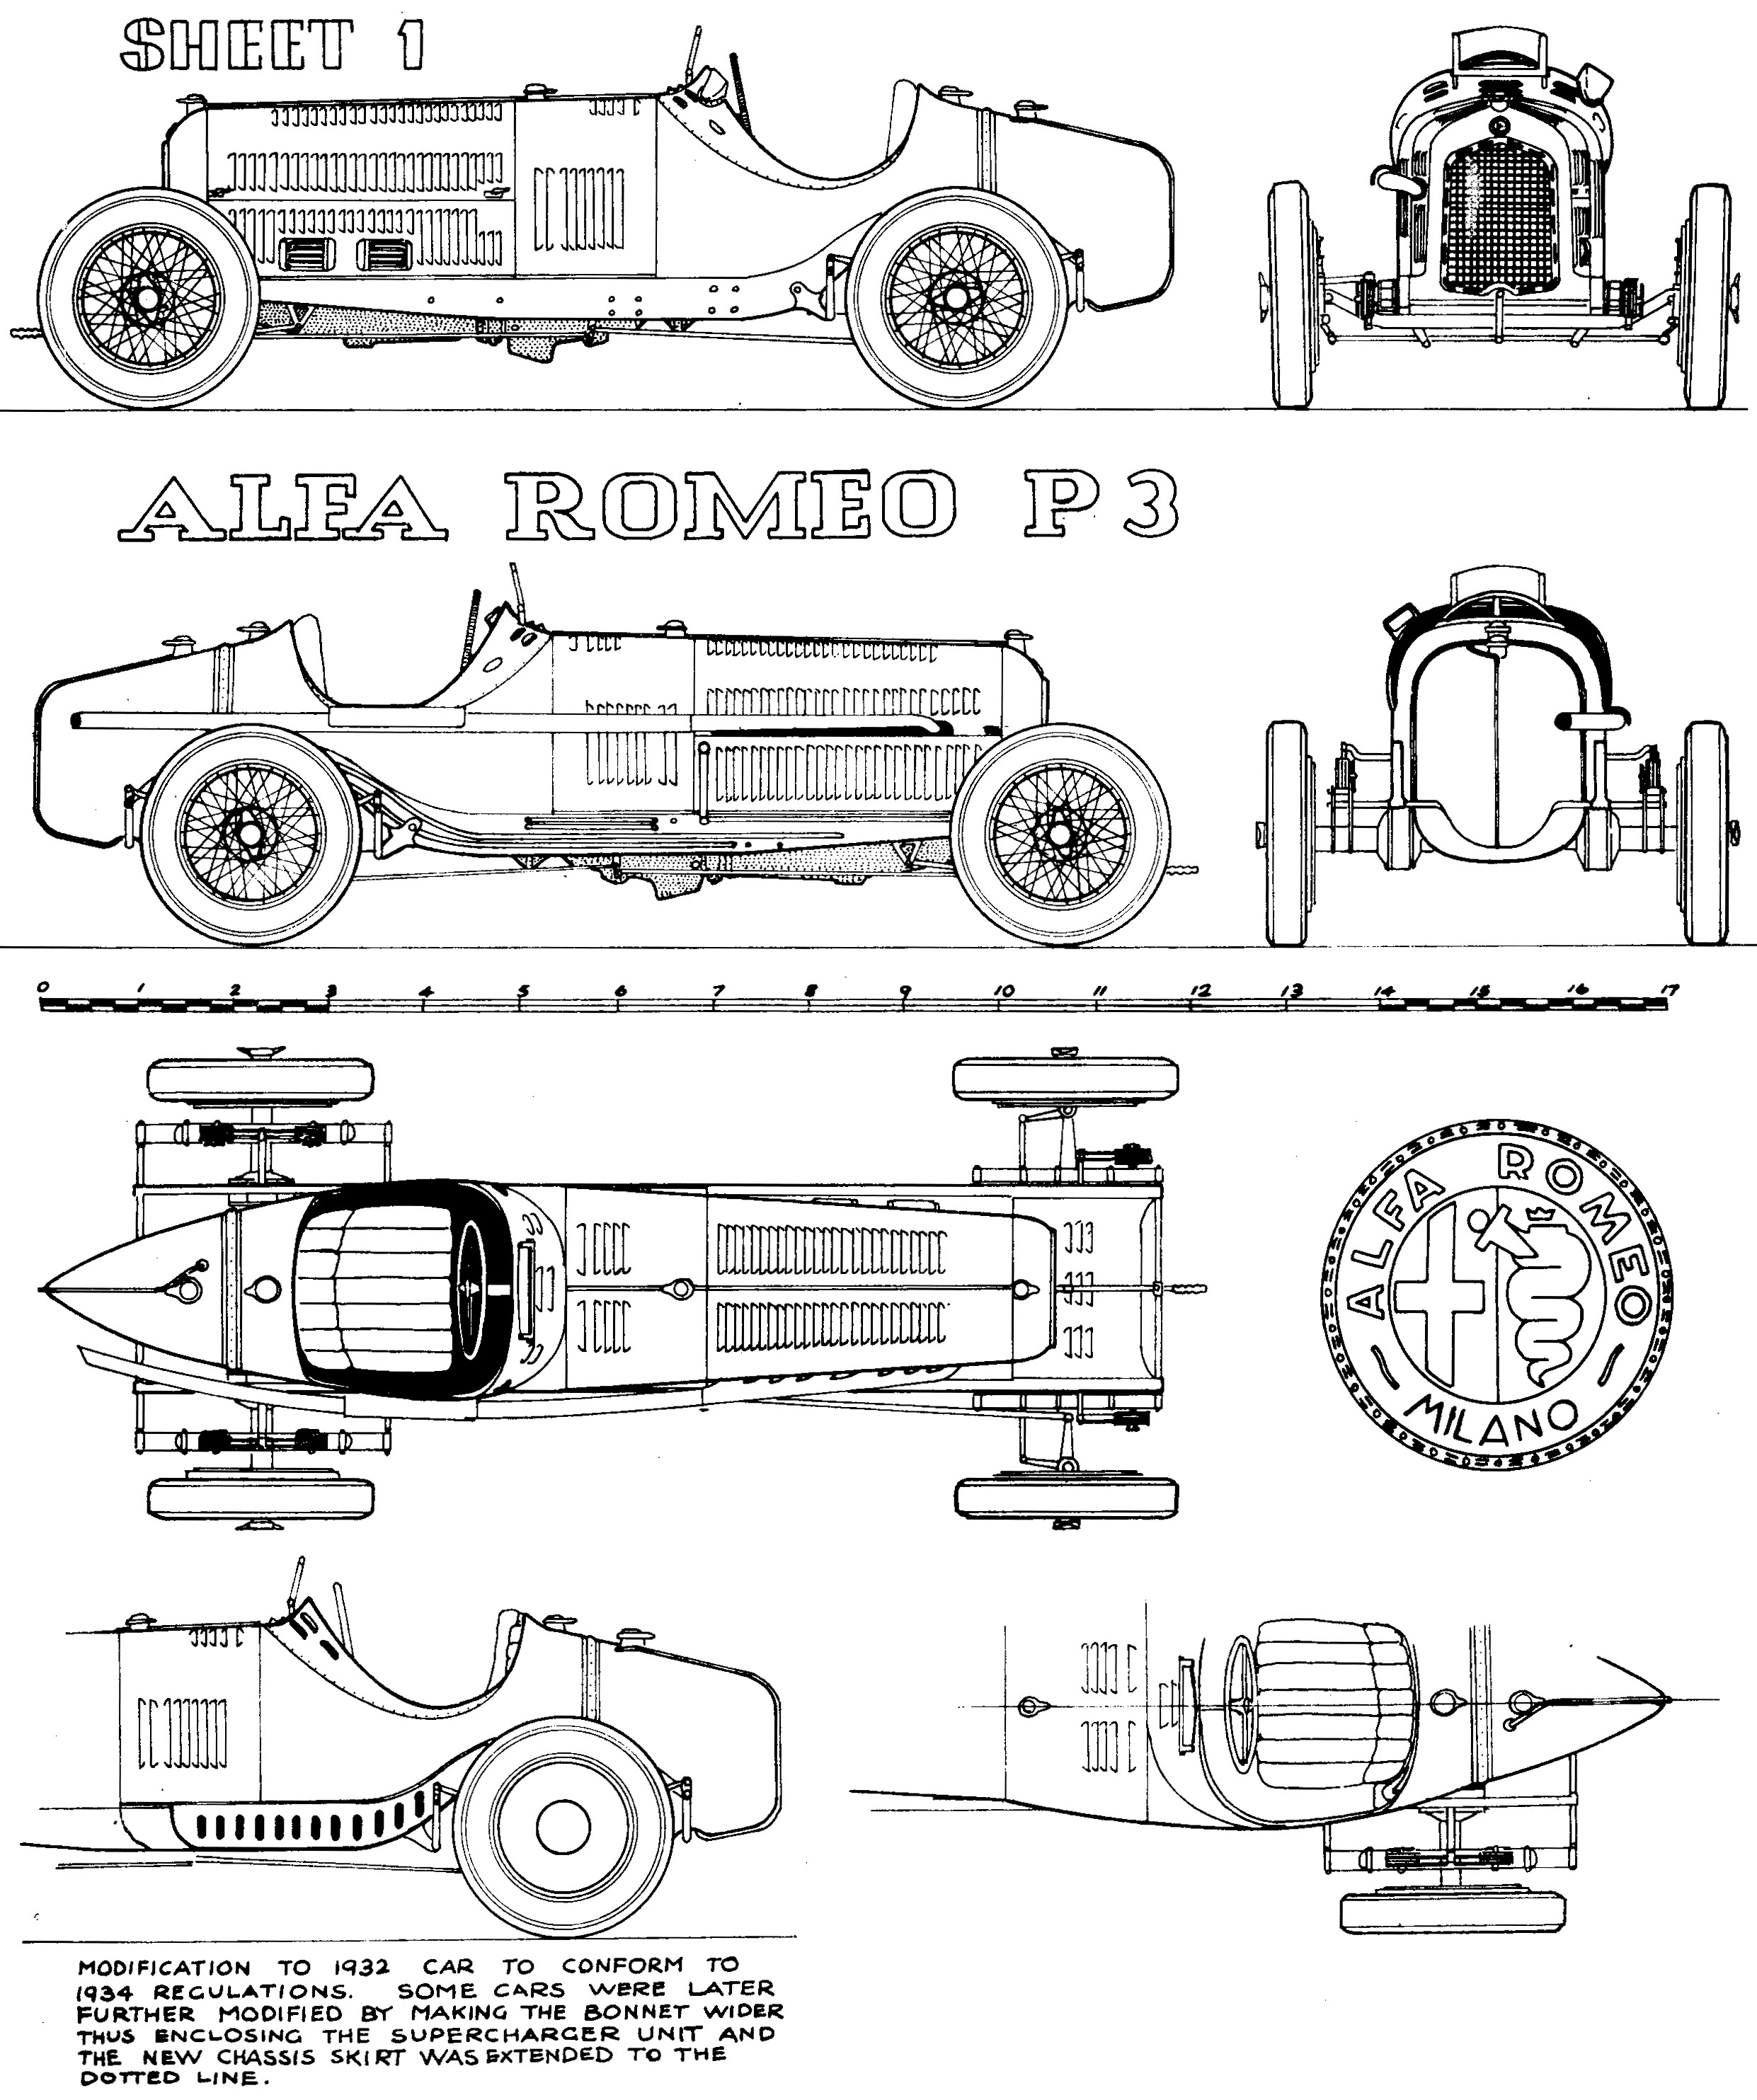 Car Part Diagram Imagem Relacionada Auto Early Racers Pinterest Of Car Part Diagram